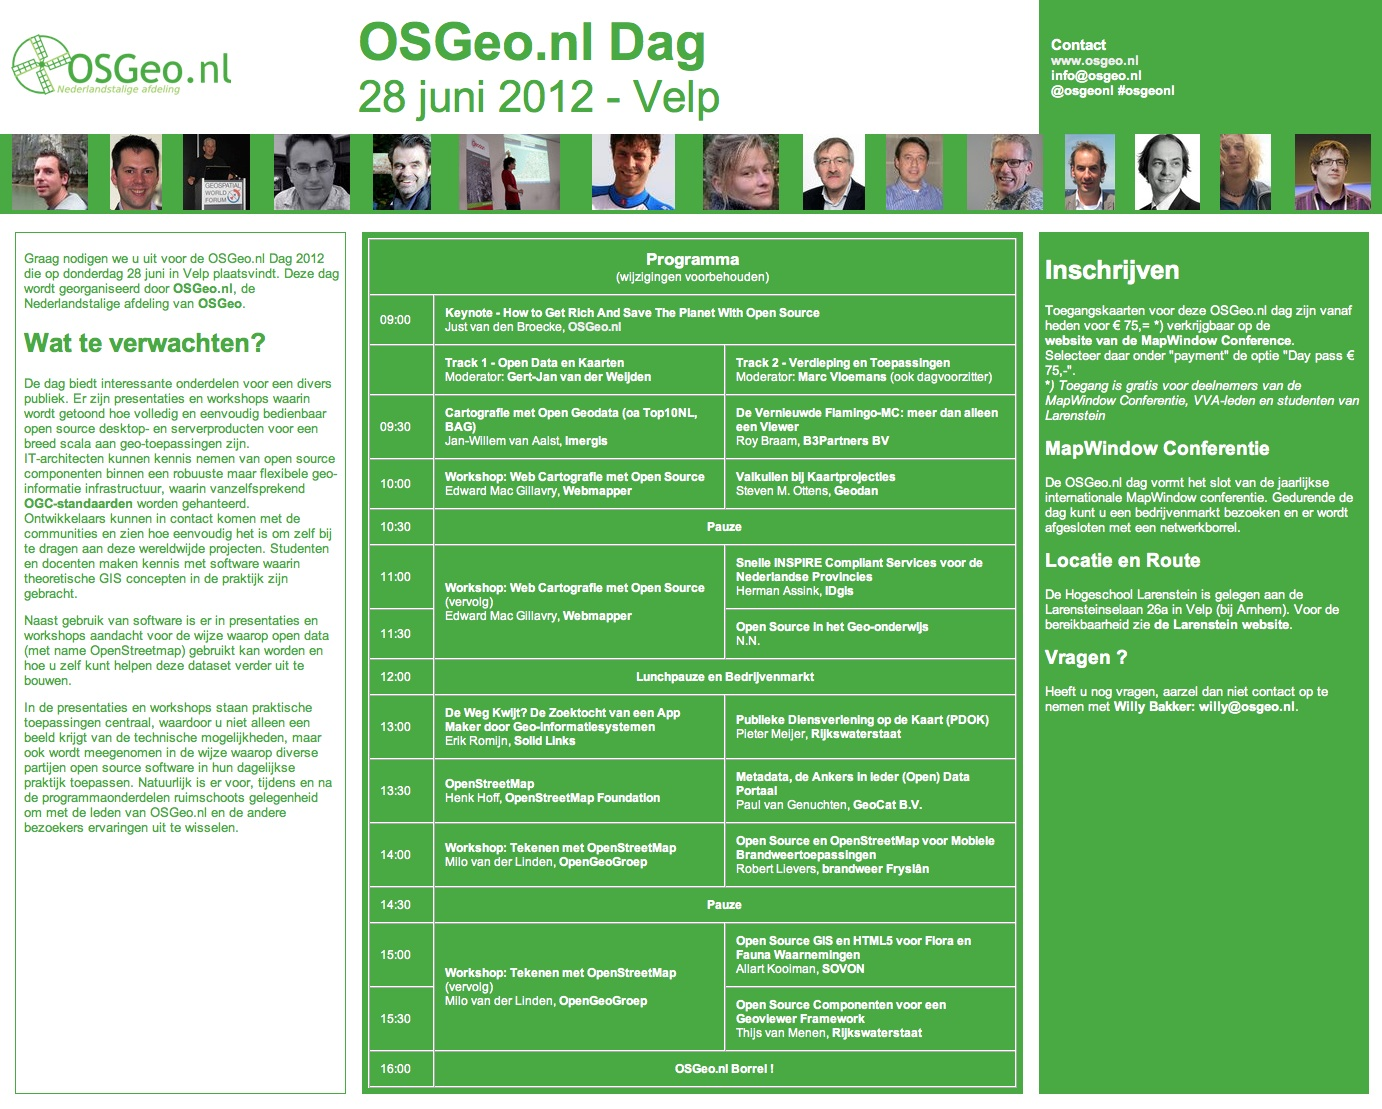 Programma OSGeo.nl Dag